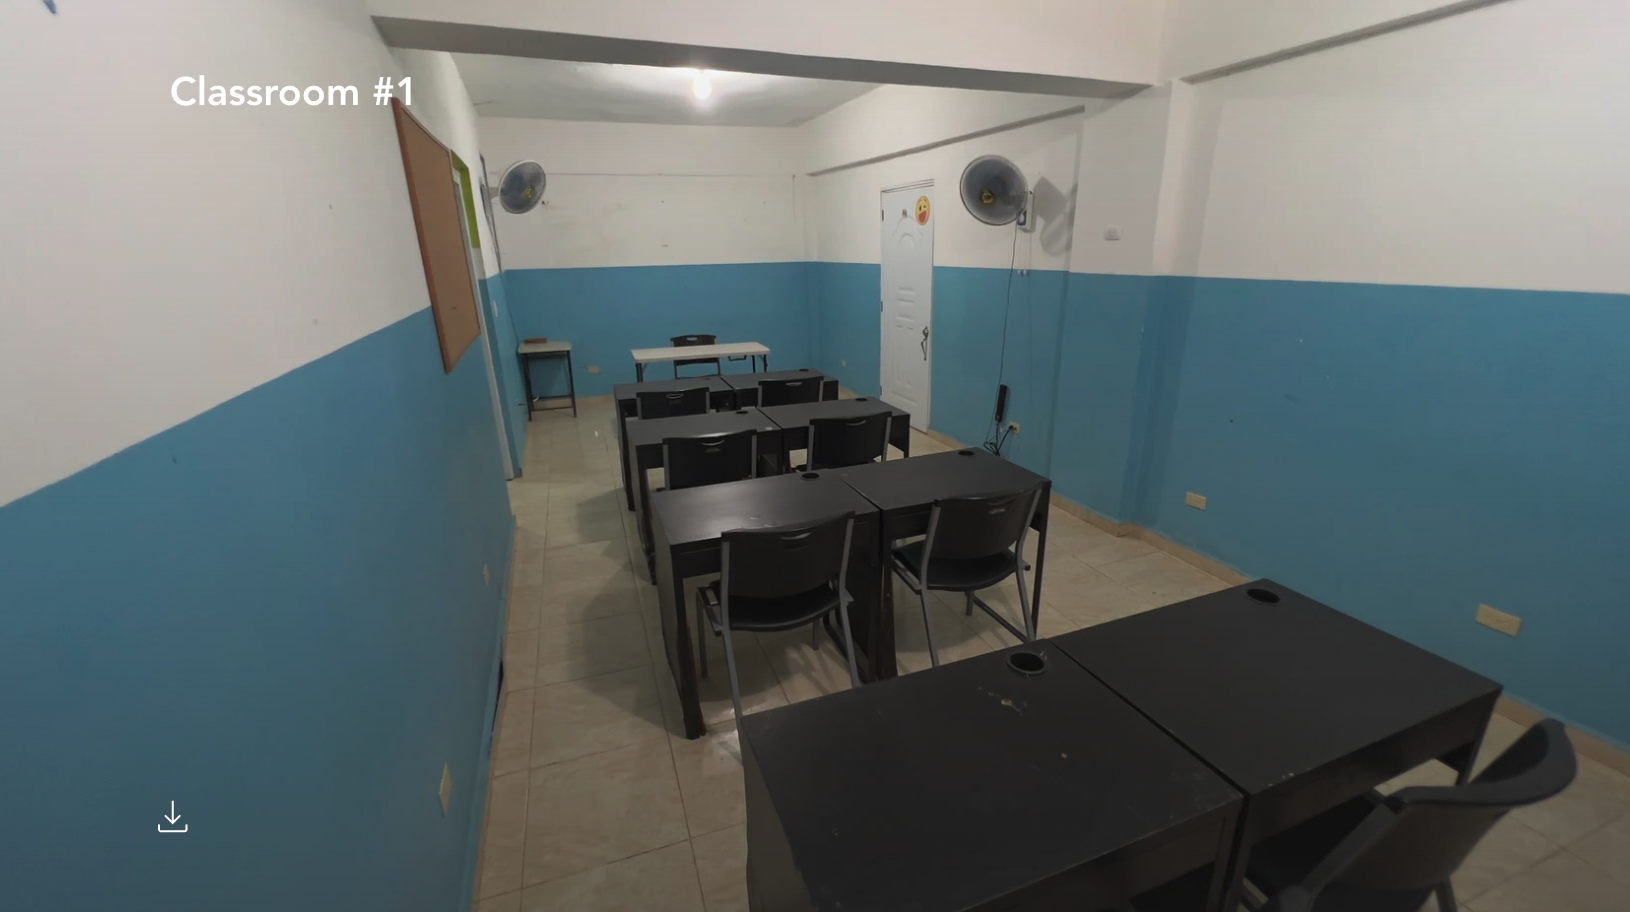 Hostel classroom Monti Cristi